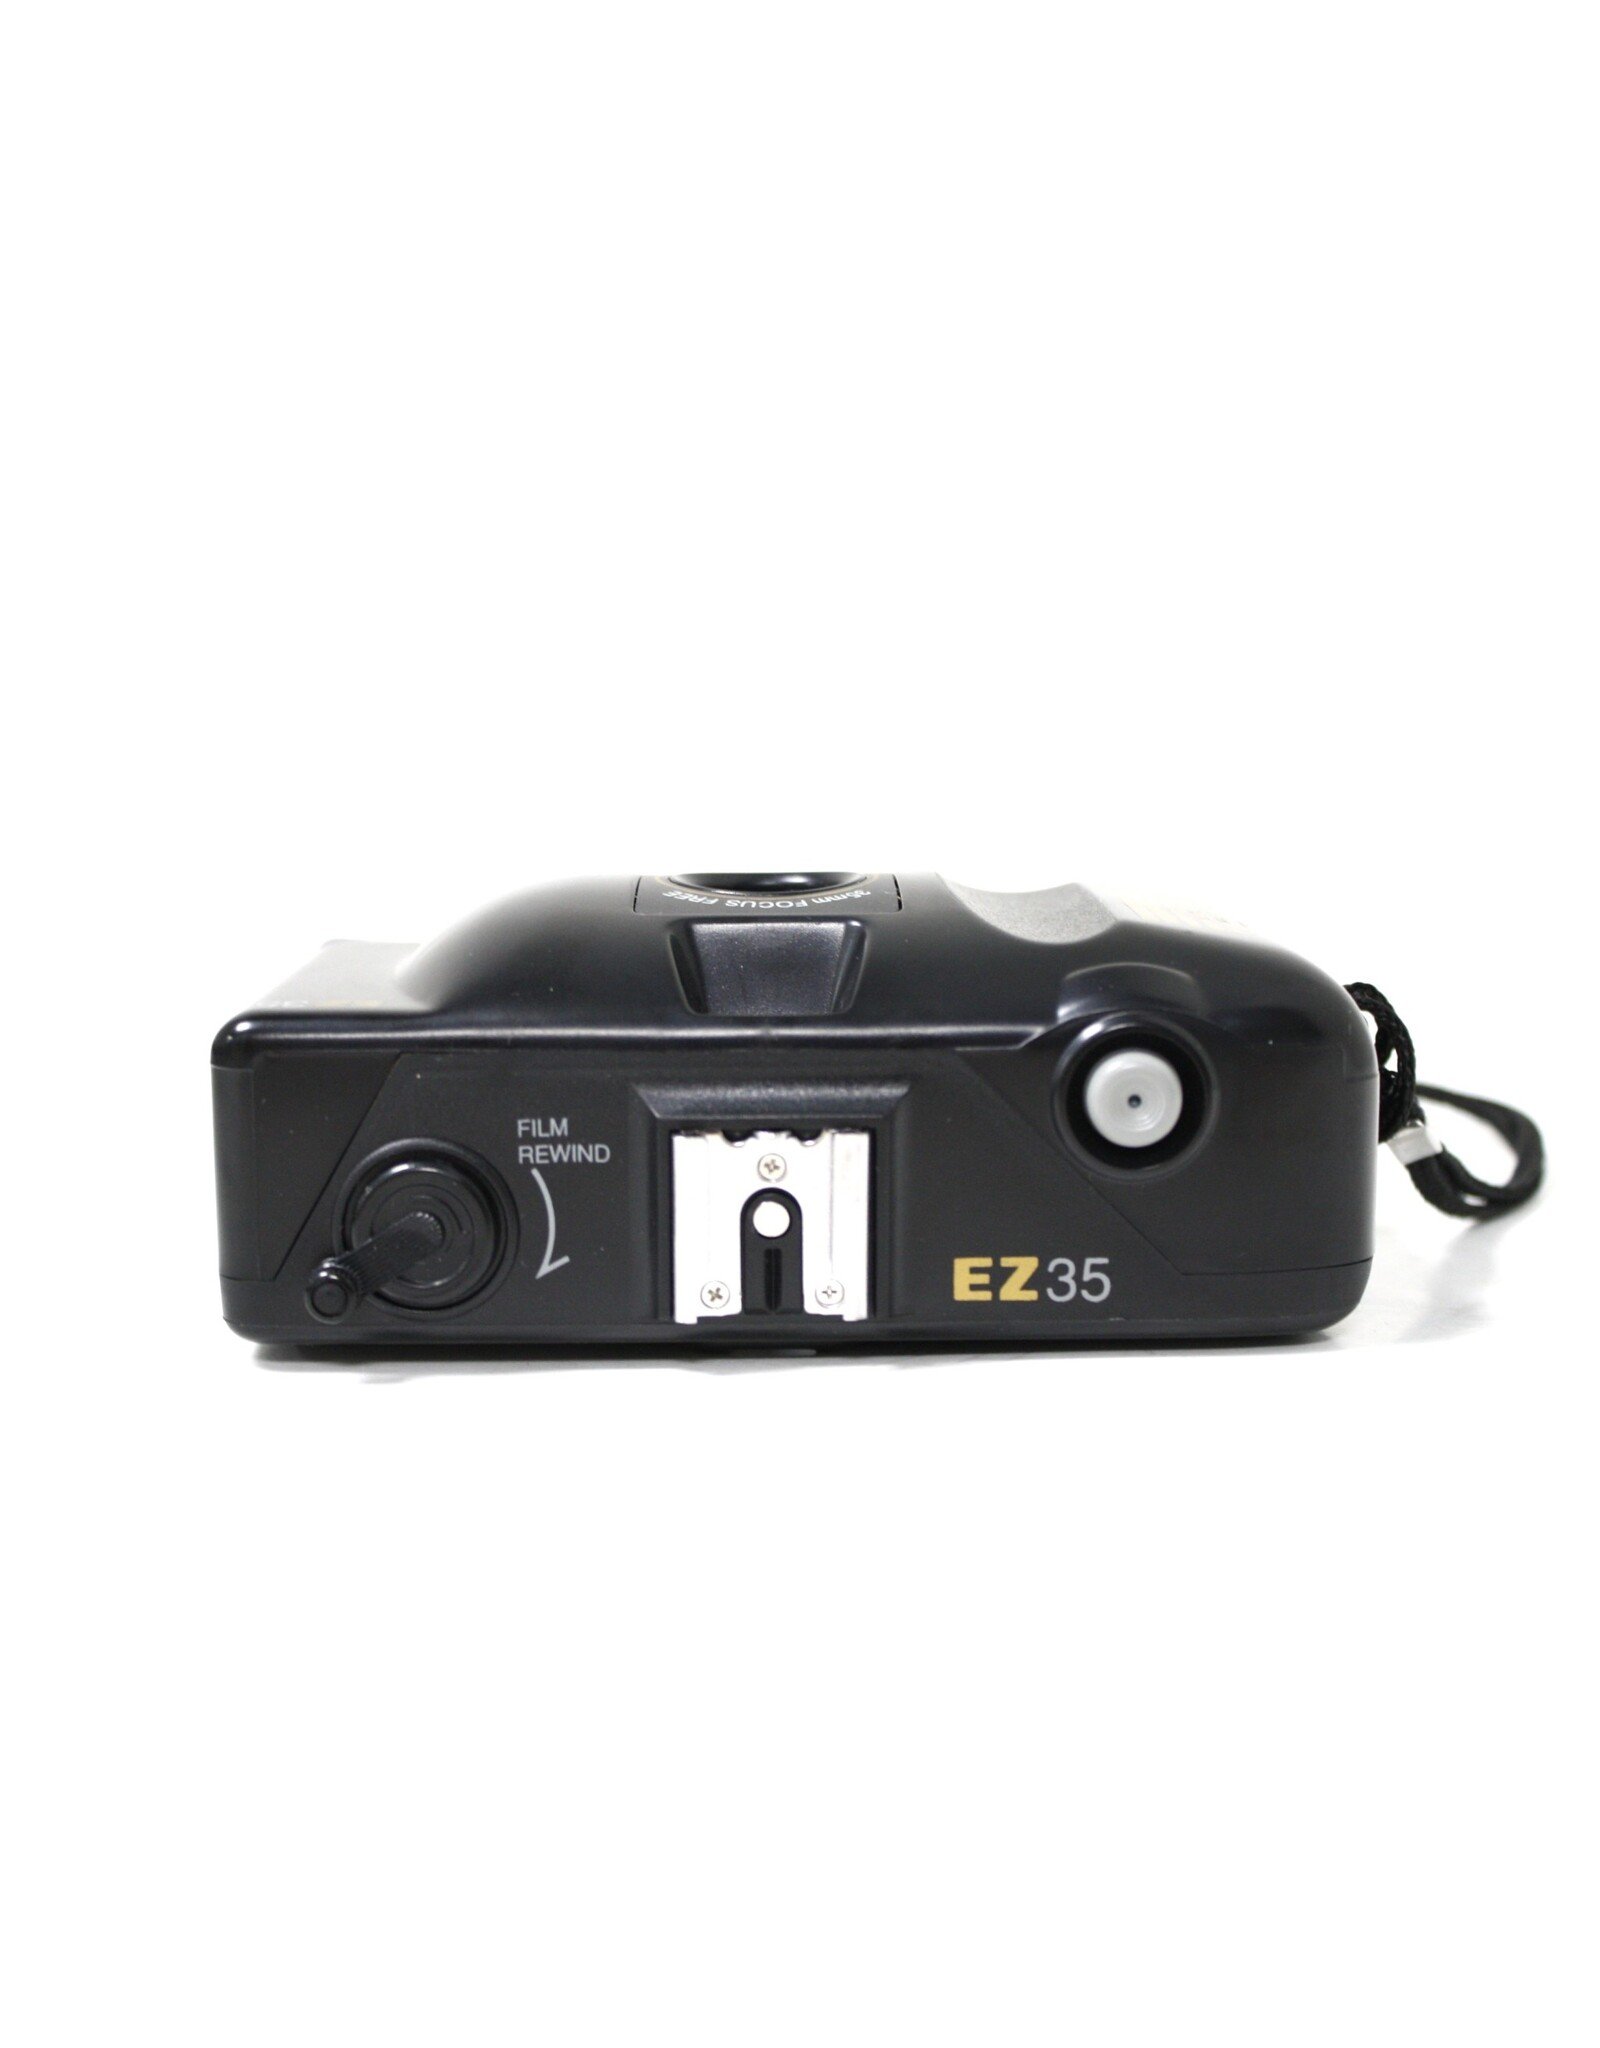 Vivitar EZ35 35mm Film Camera (Pre-owned)